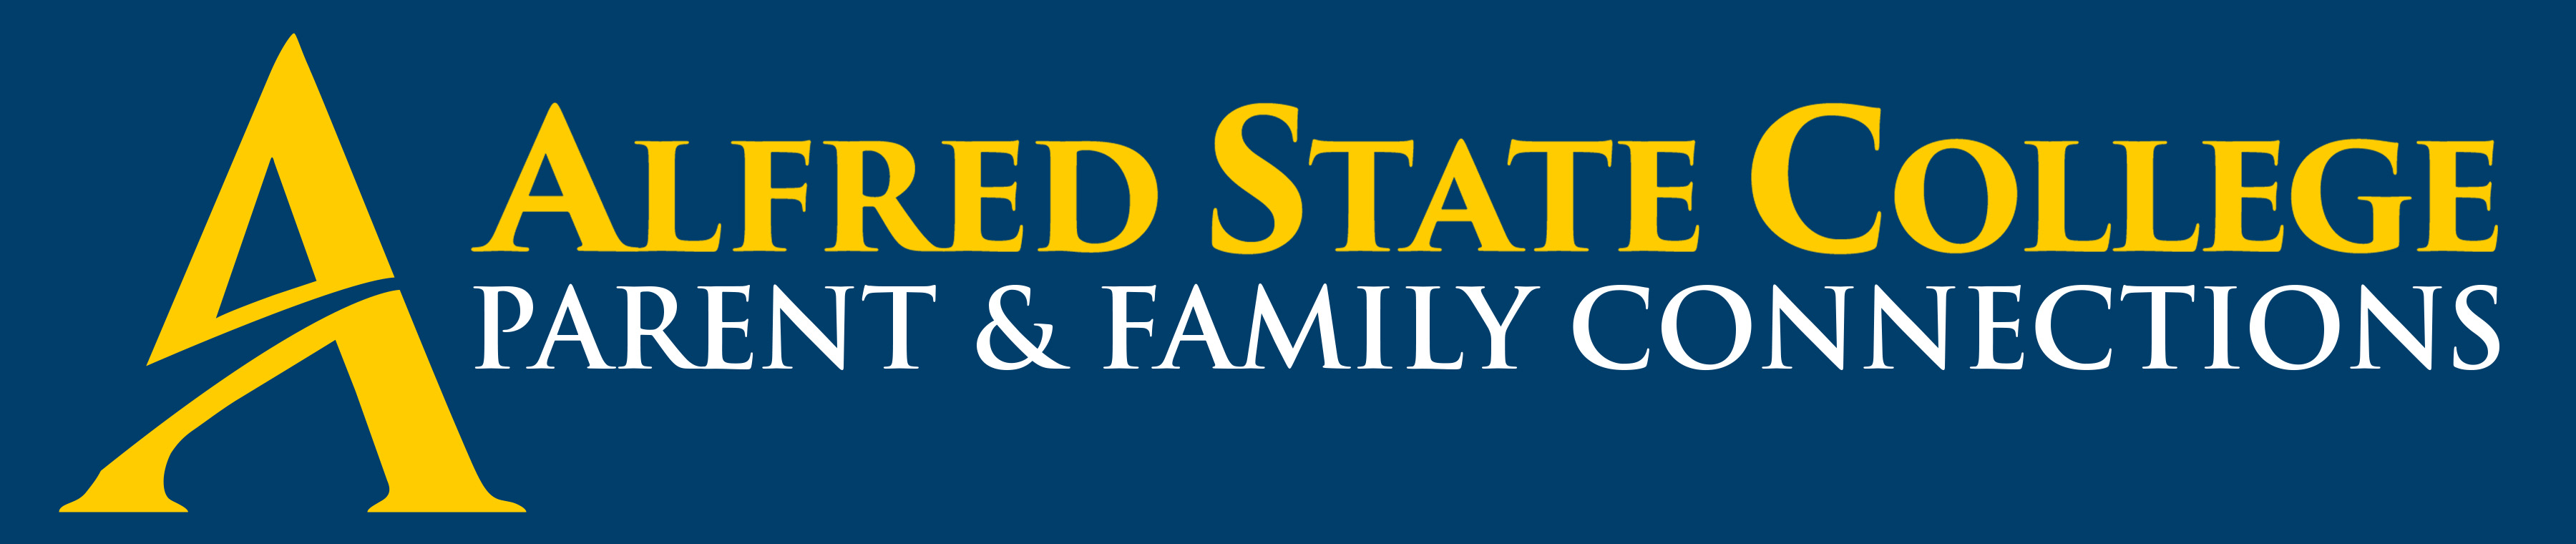 logo for Parent & Family Connections portal